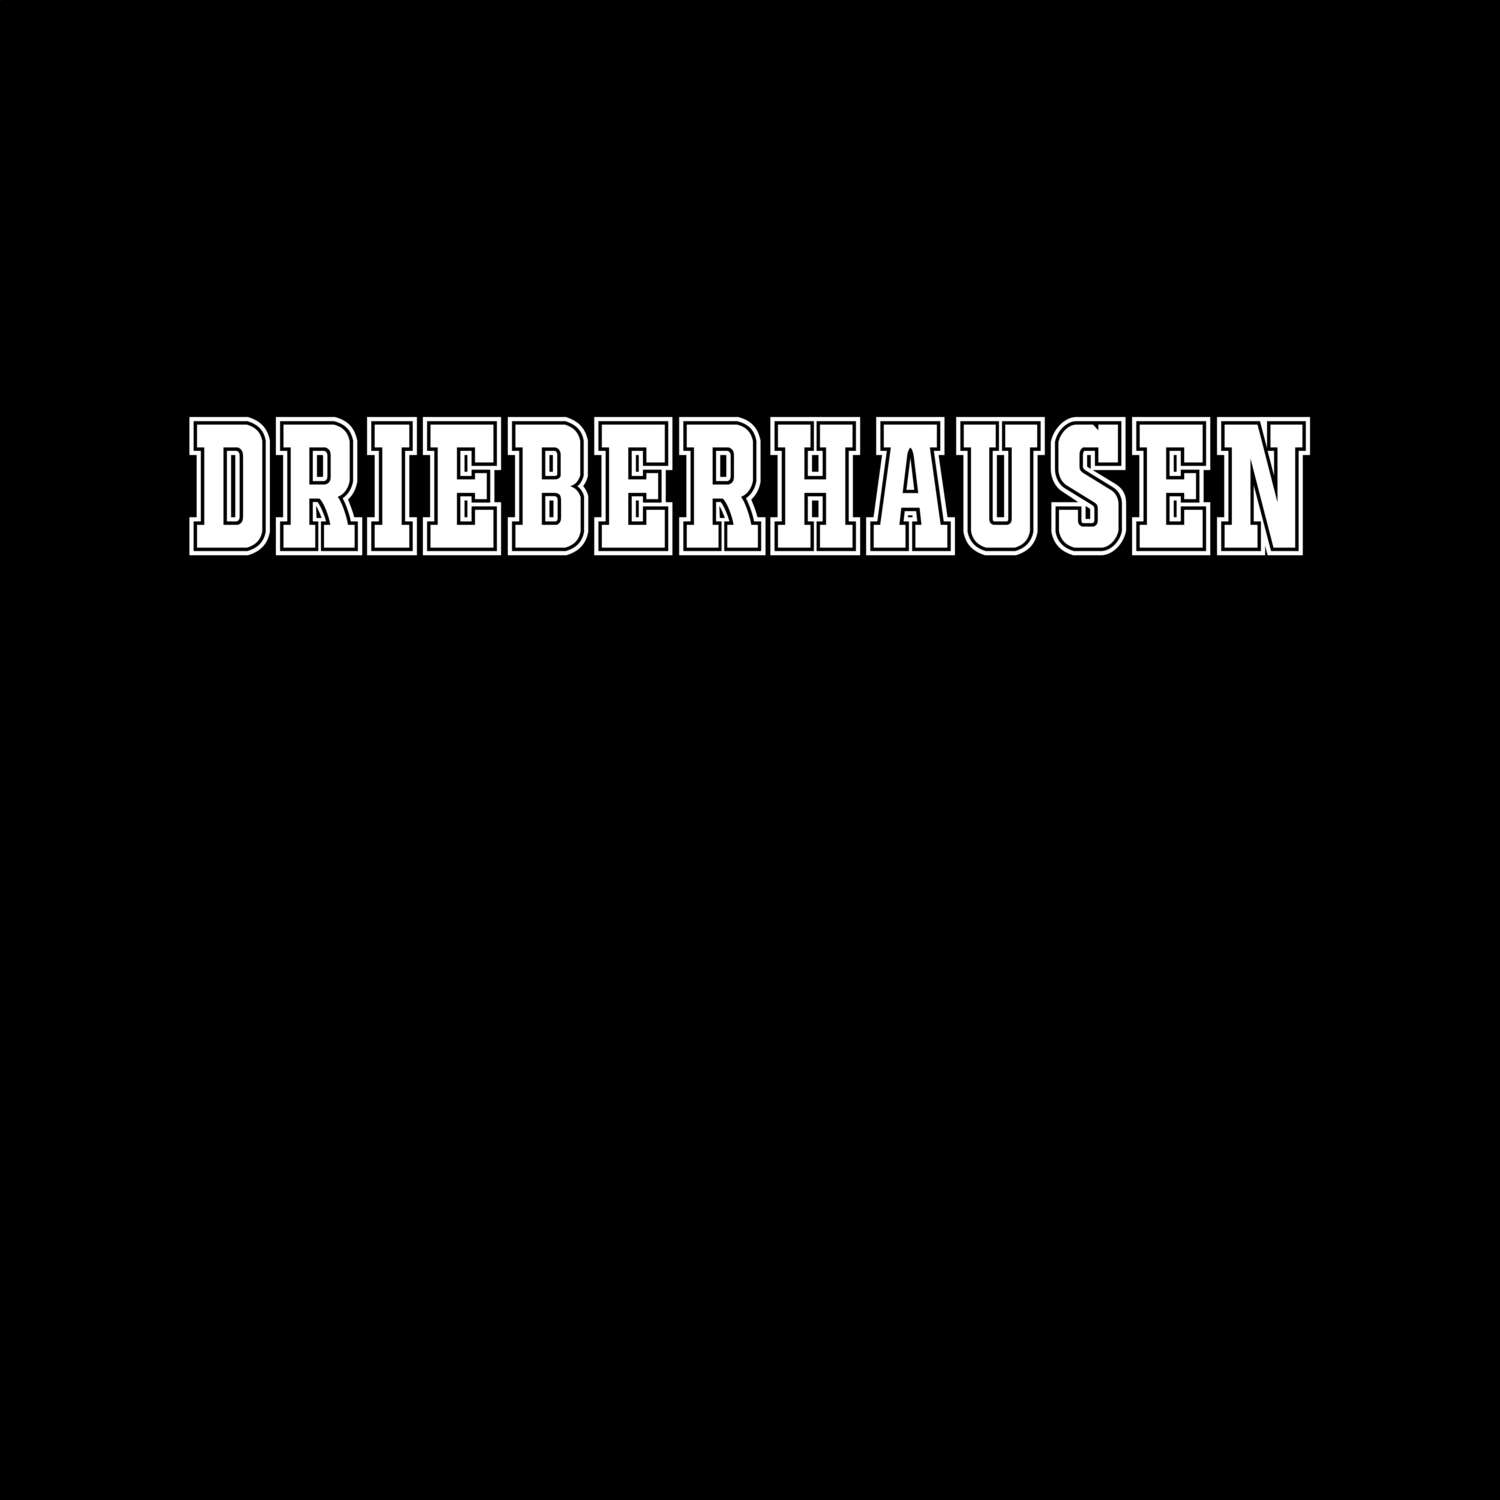 Drieberhausen T-Shirt »Classic«